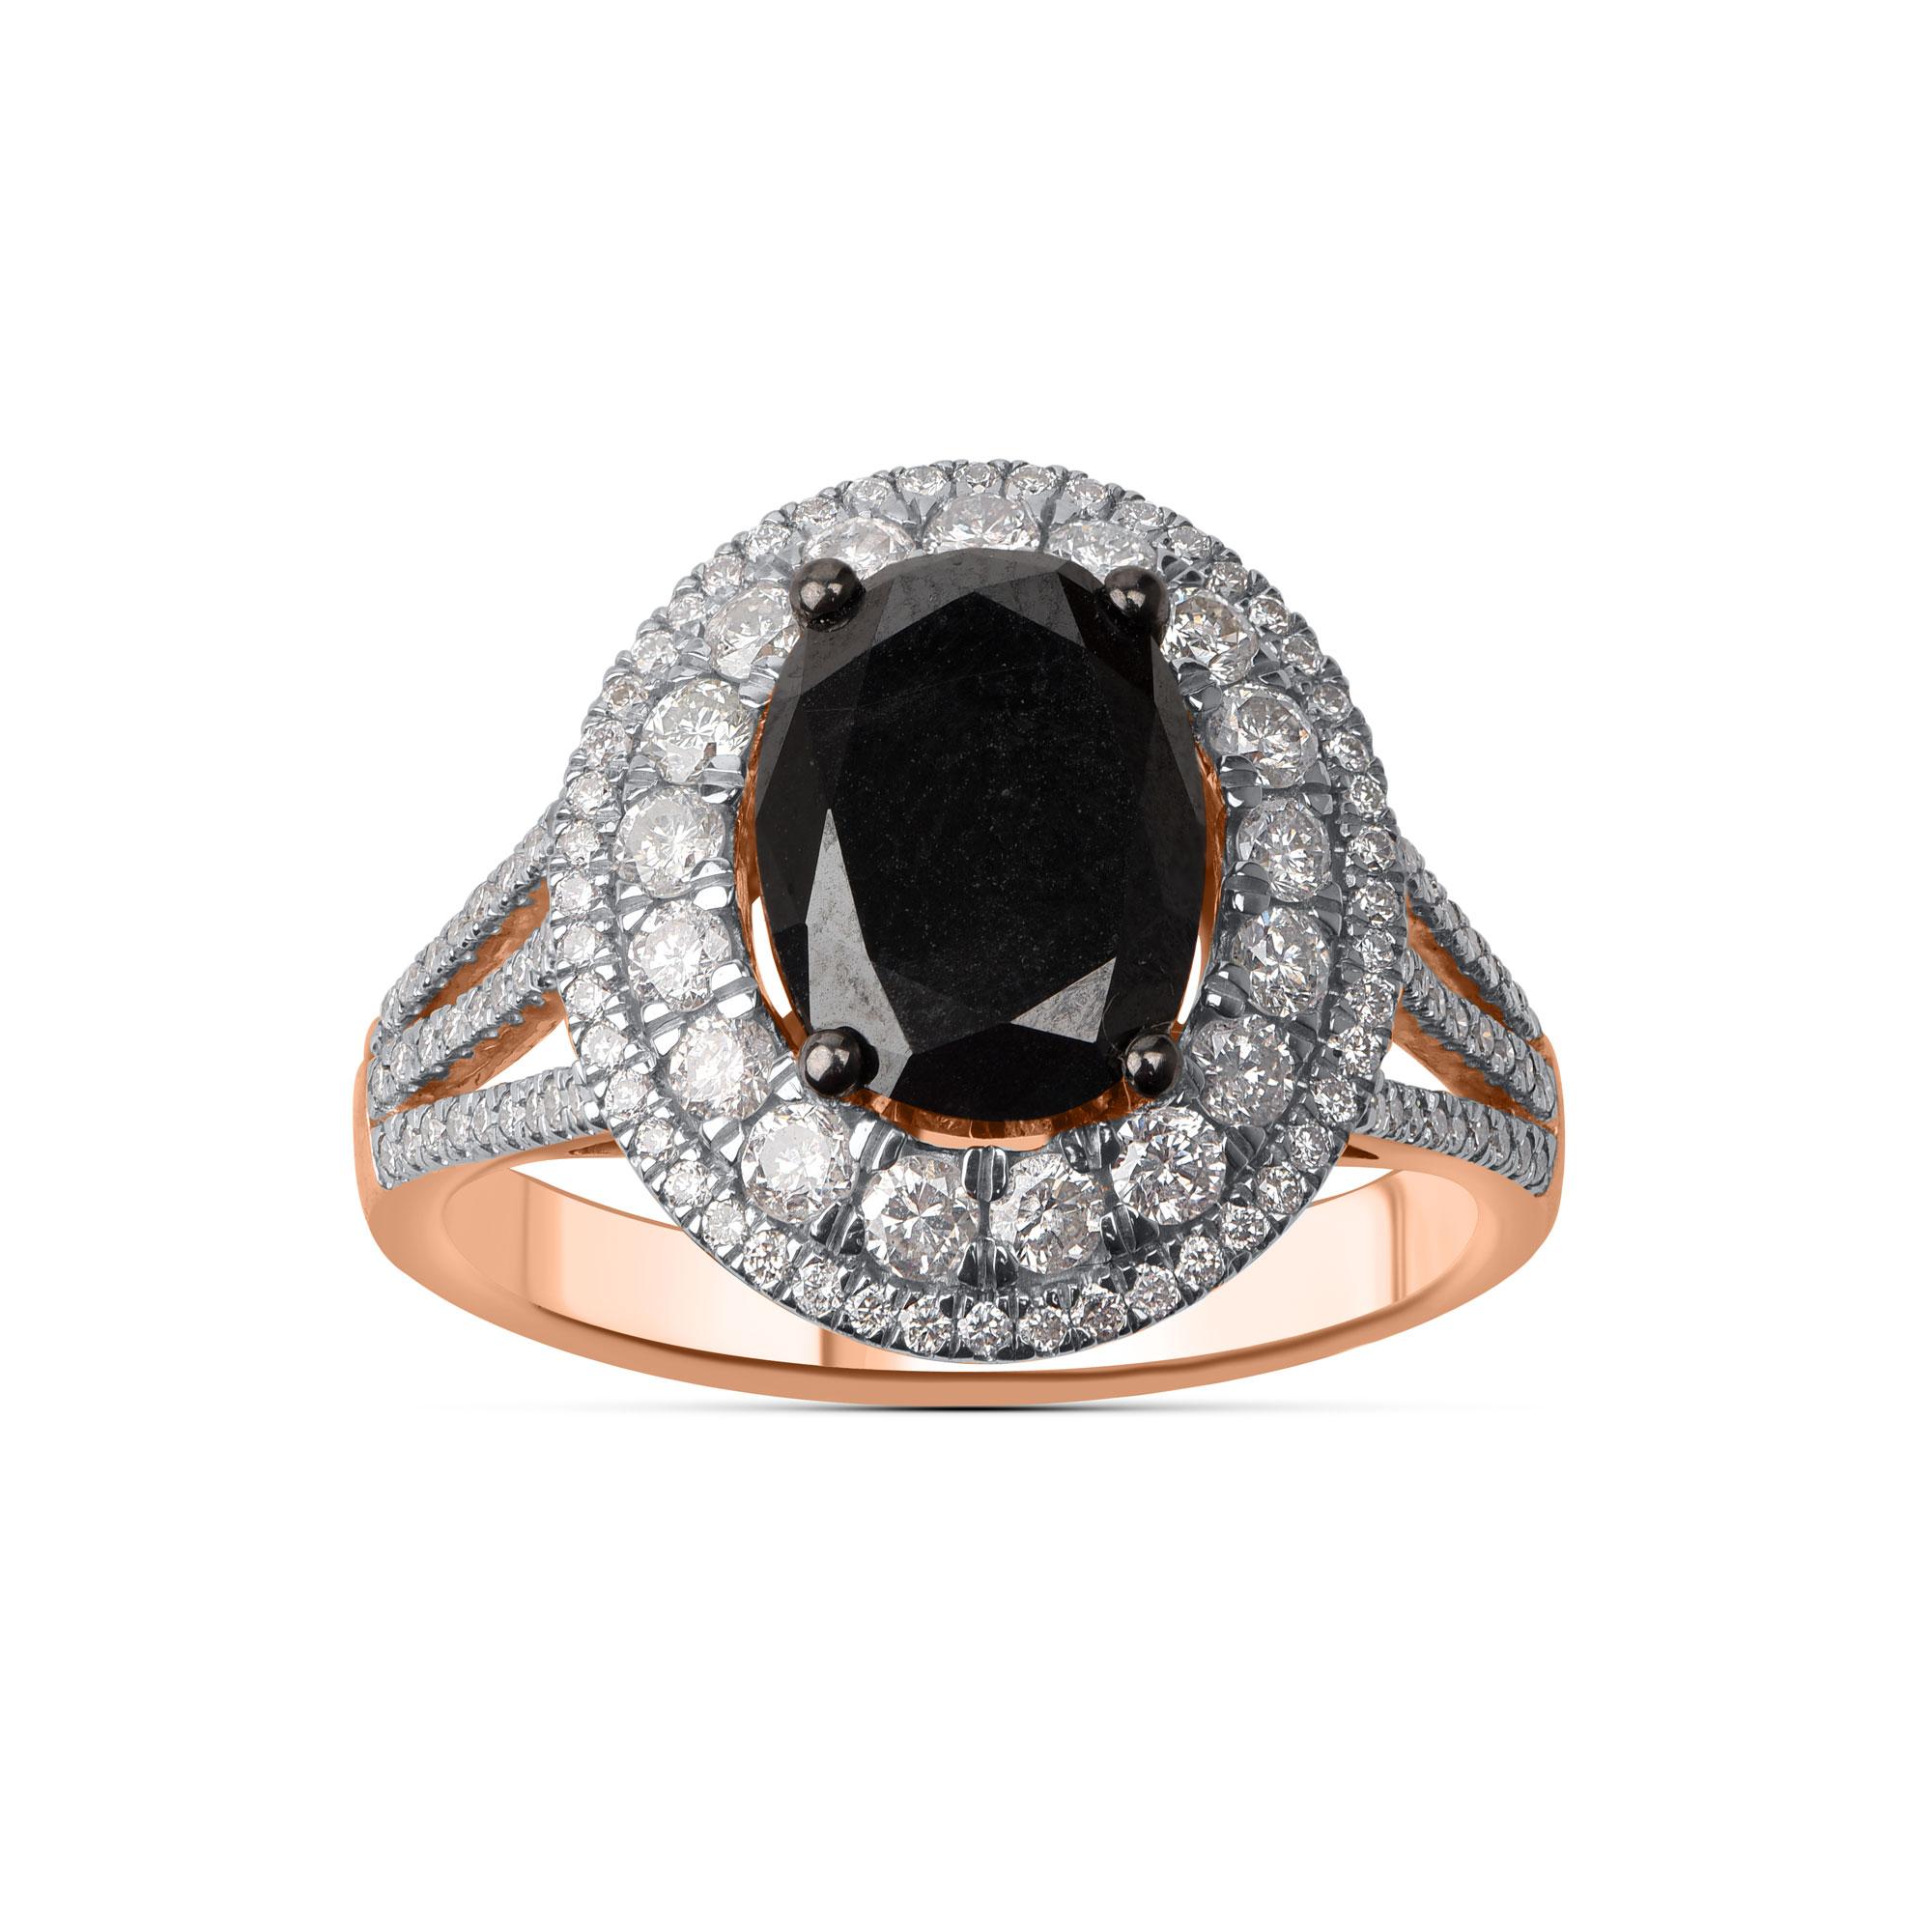 3 carat black diamond ring